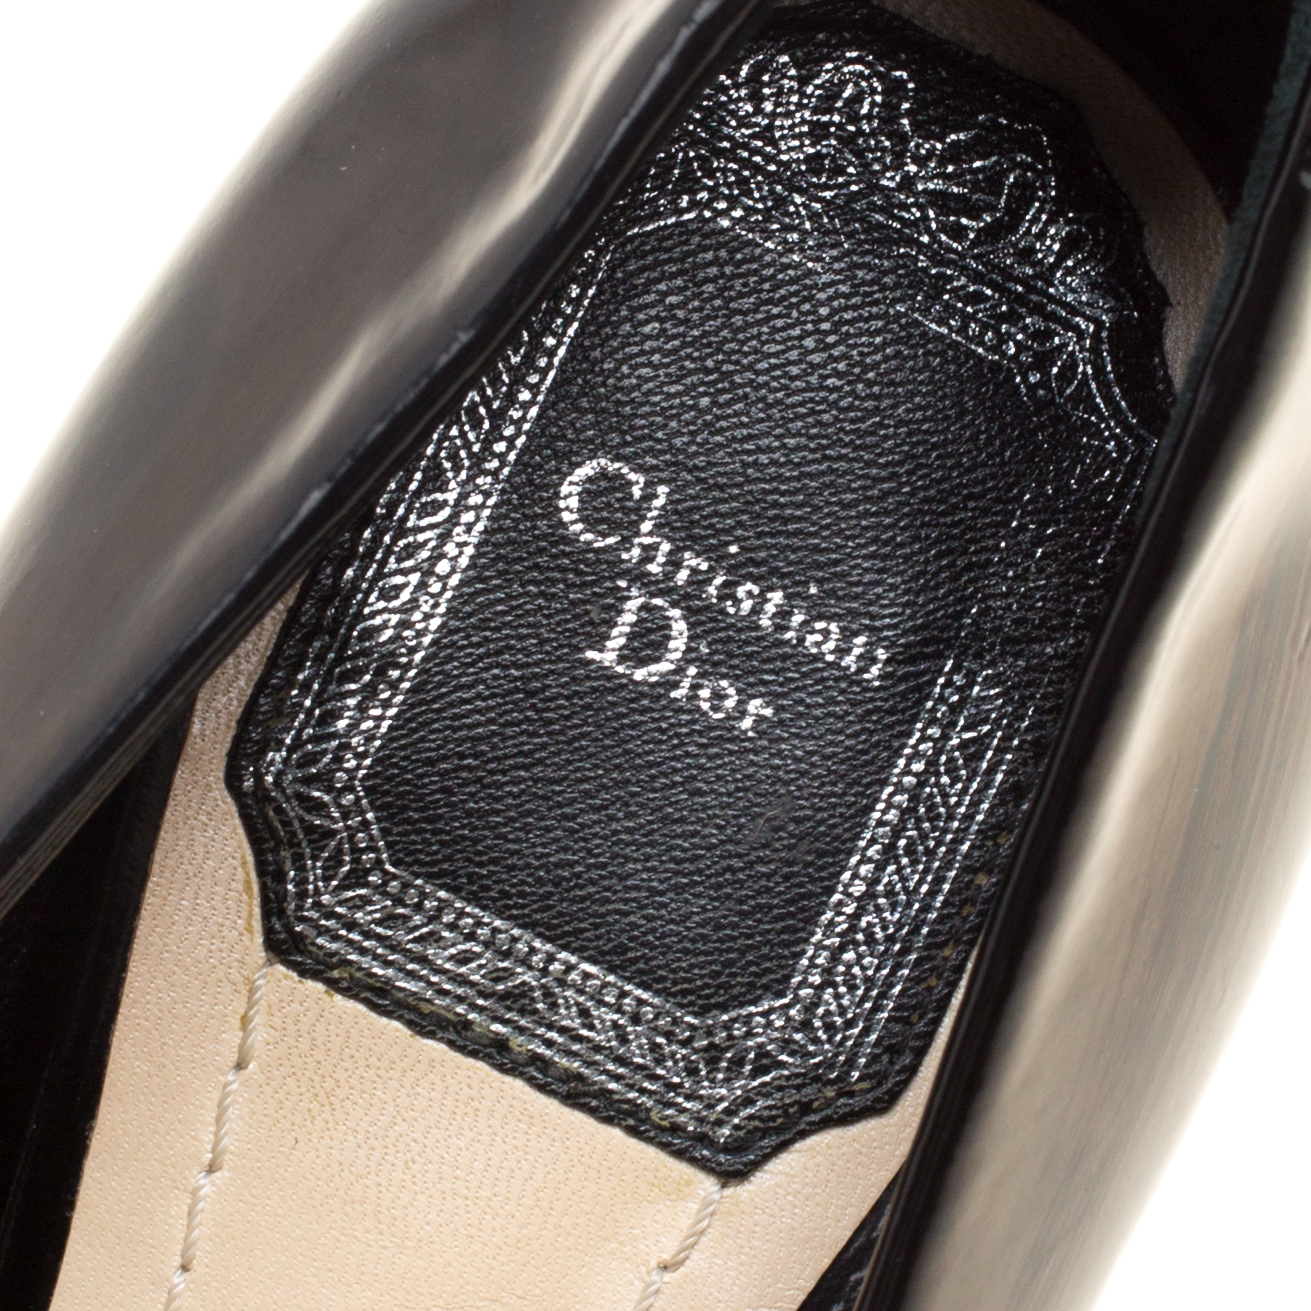 Pre-owned Dior Black Leather Peep Toe Platform Pumps Size 36